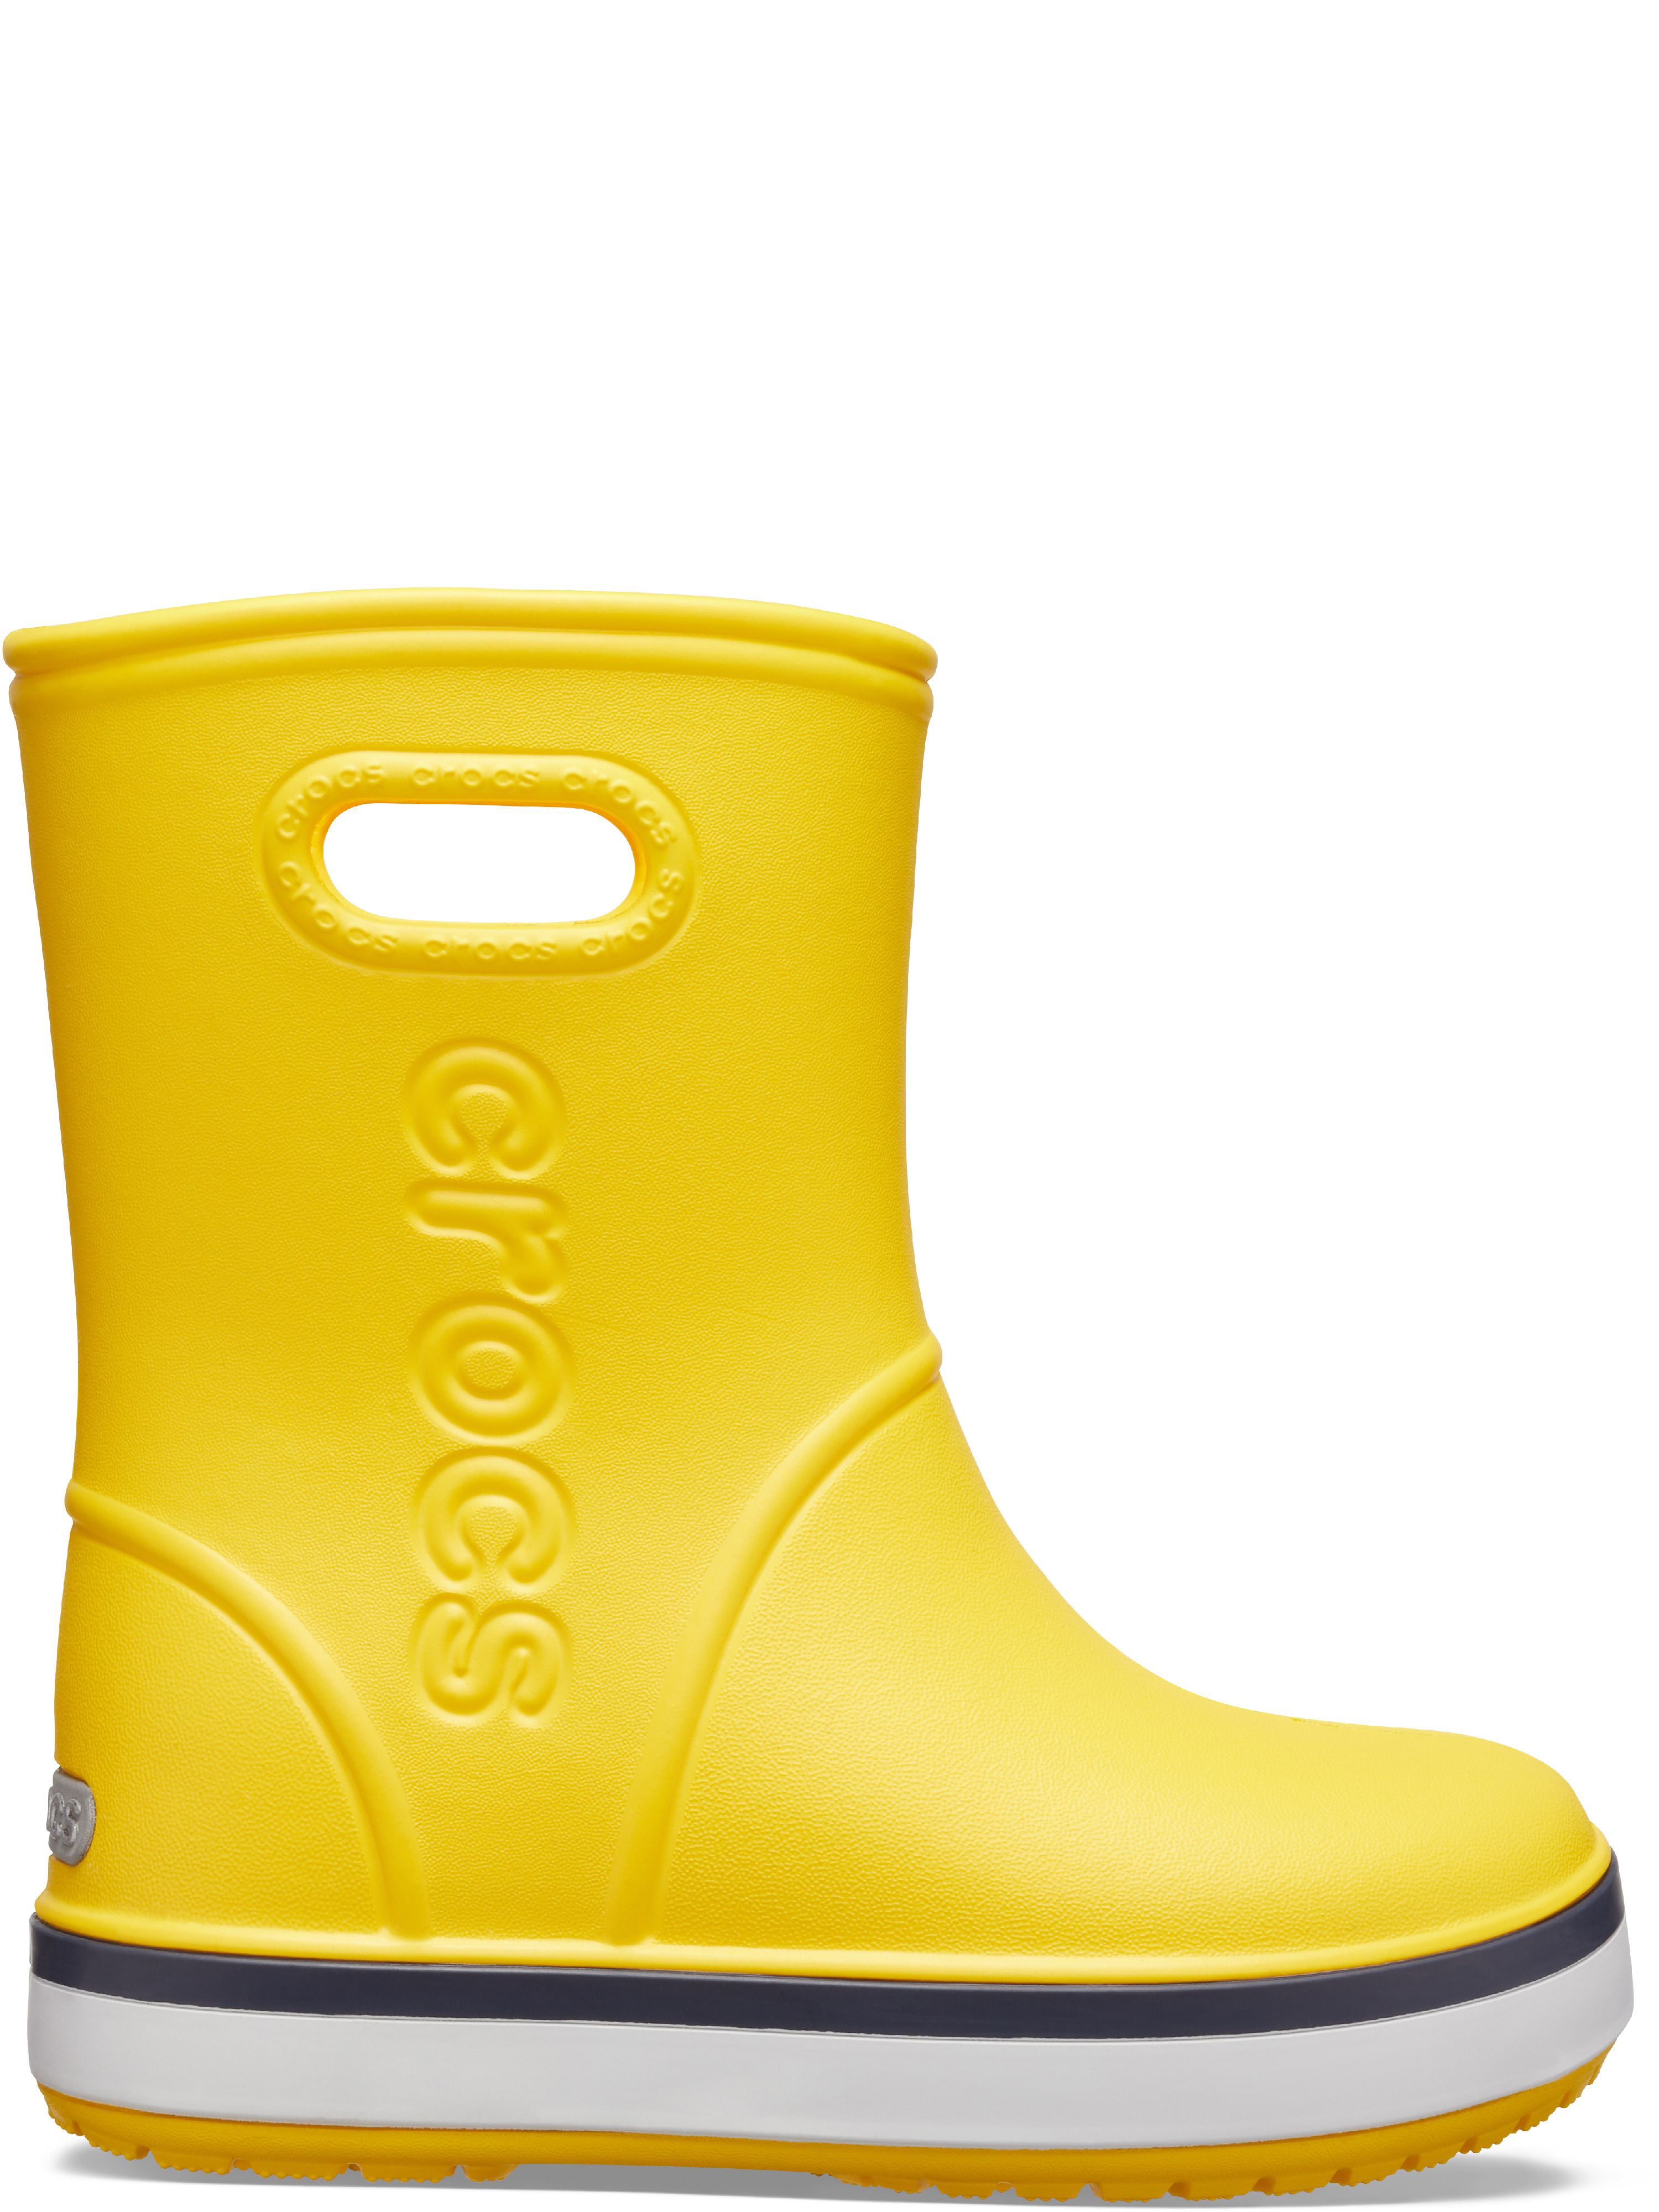 Сапоги кроксы мужские. Crocs Crocband Rain Boot. Сапоги Crocs Crocband. Резиновые сапоги Crocs Crocband Rain Boot. Крокс желтые резиновые сапоги.